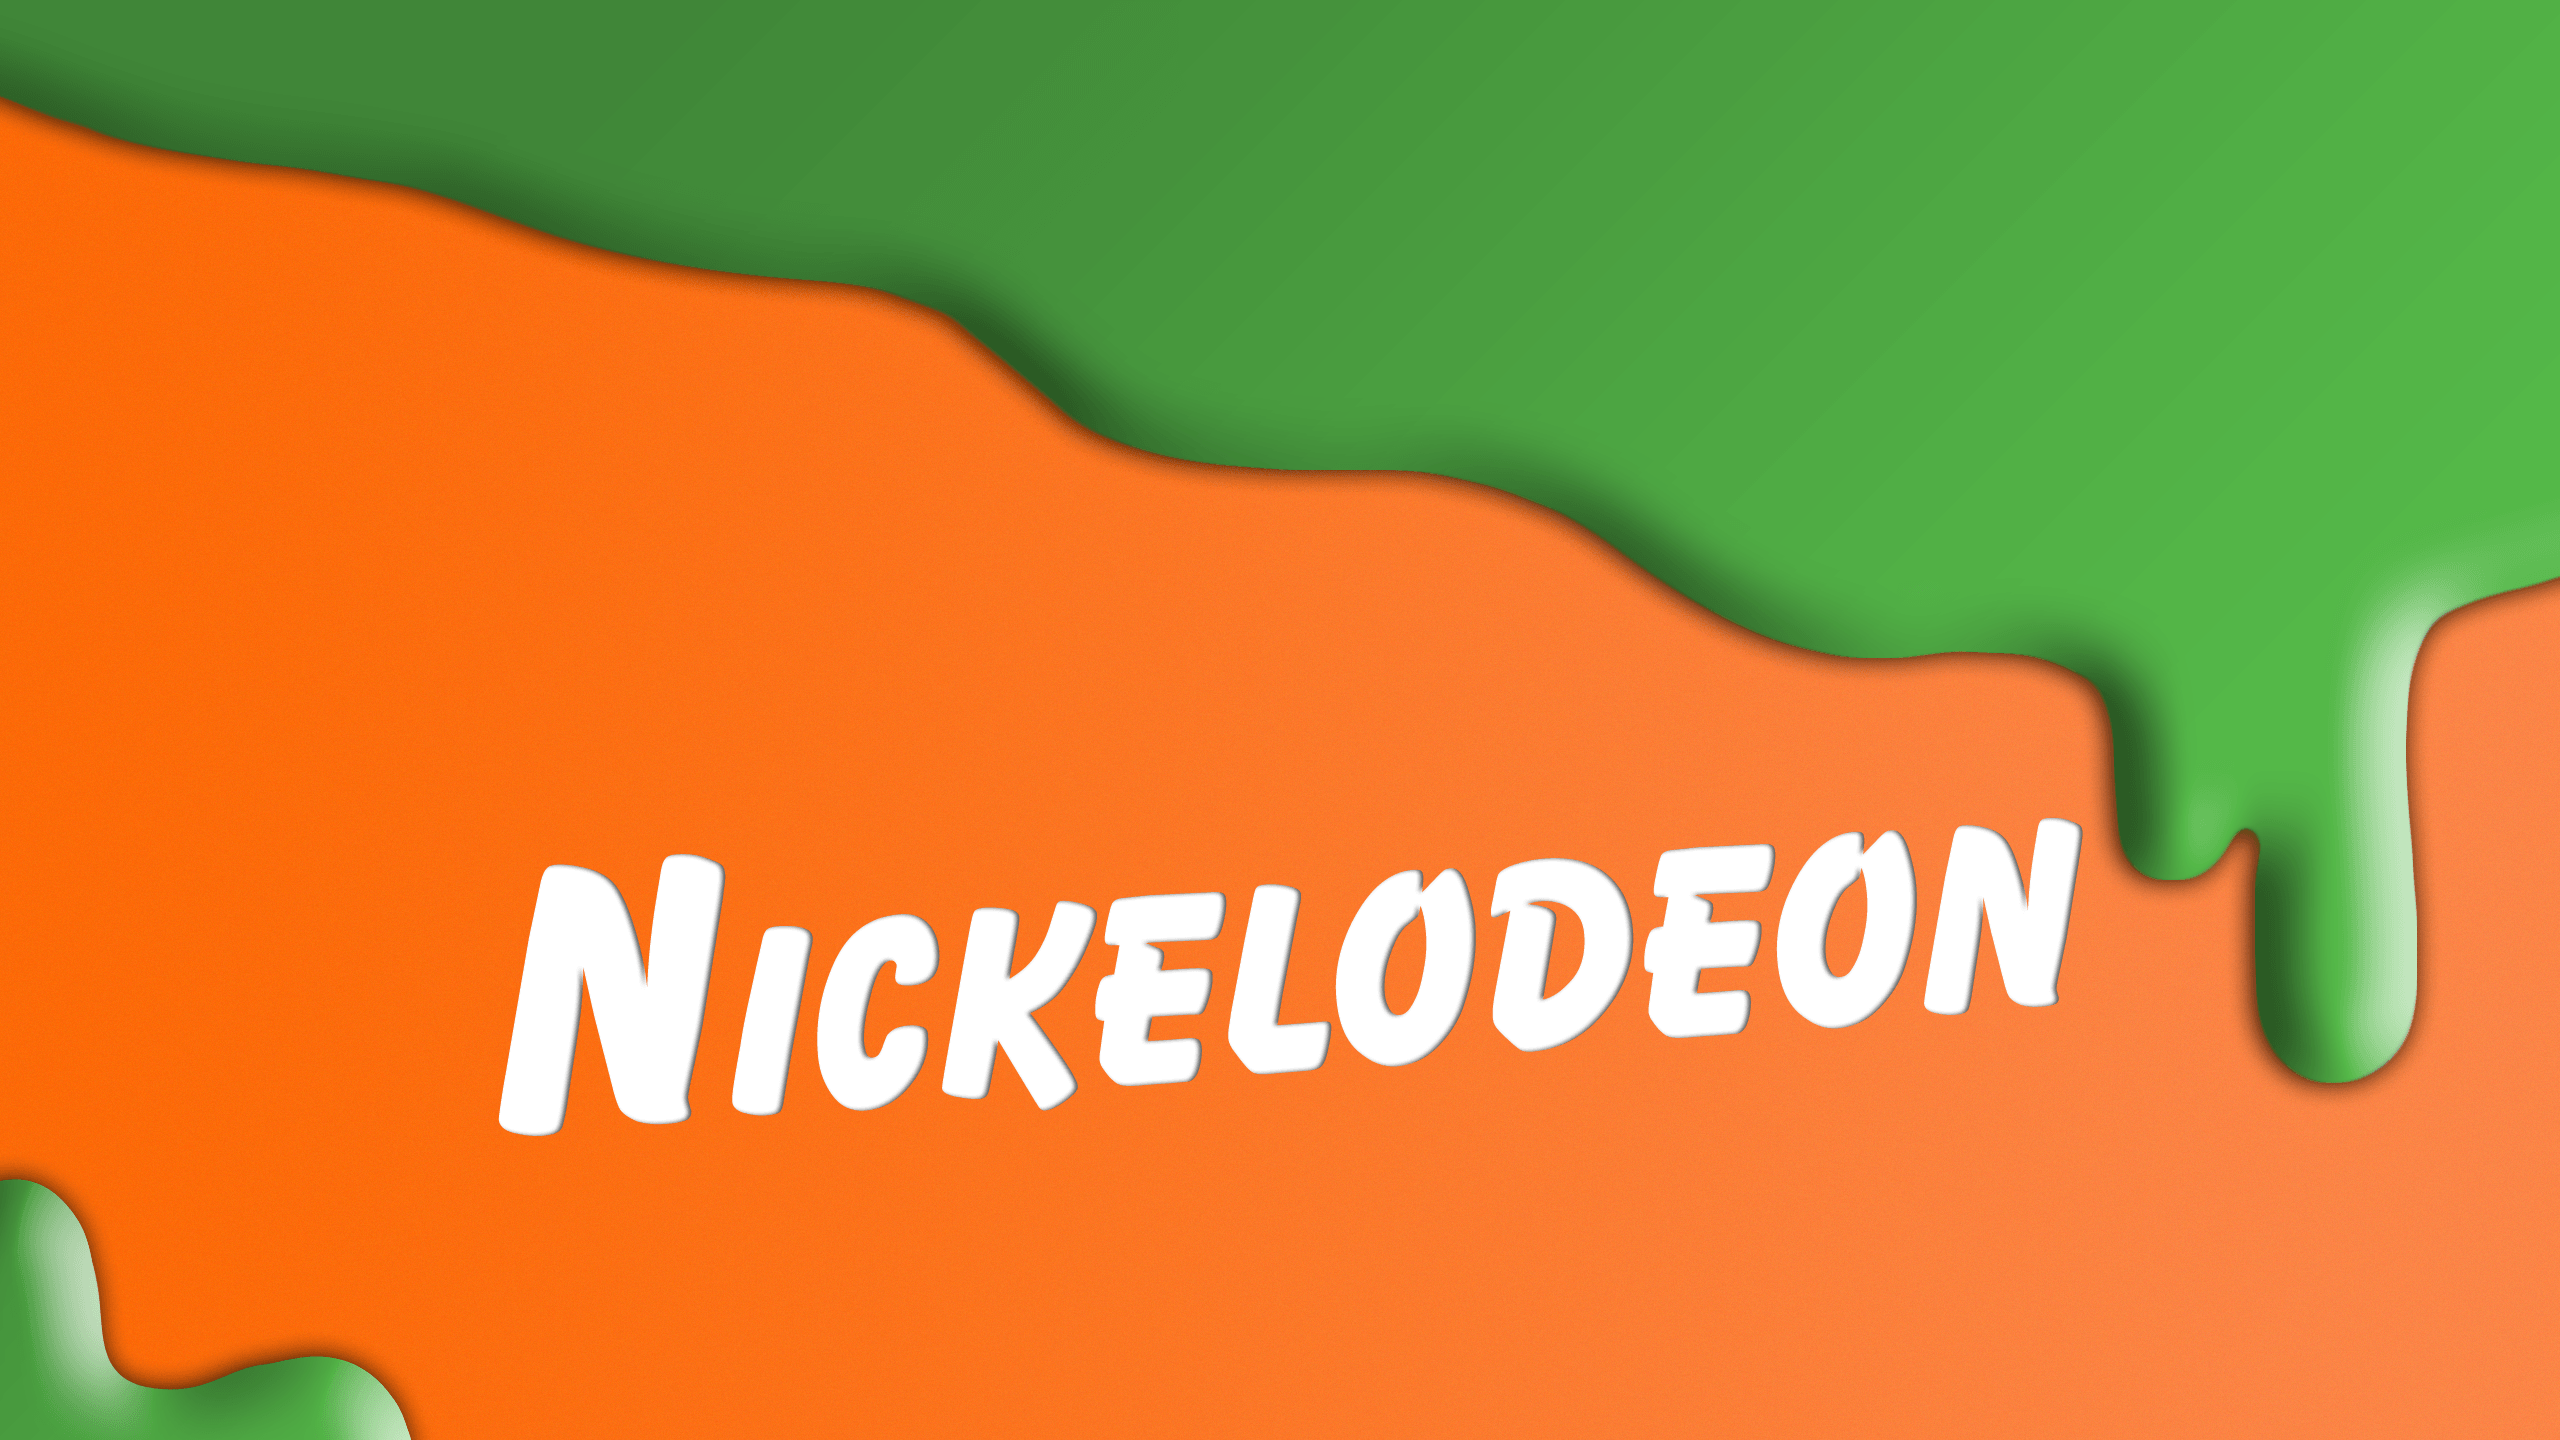 Nickelodeon Wallpaper. Slime wallpaper, Wallpaper